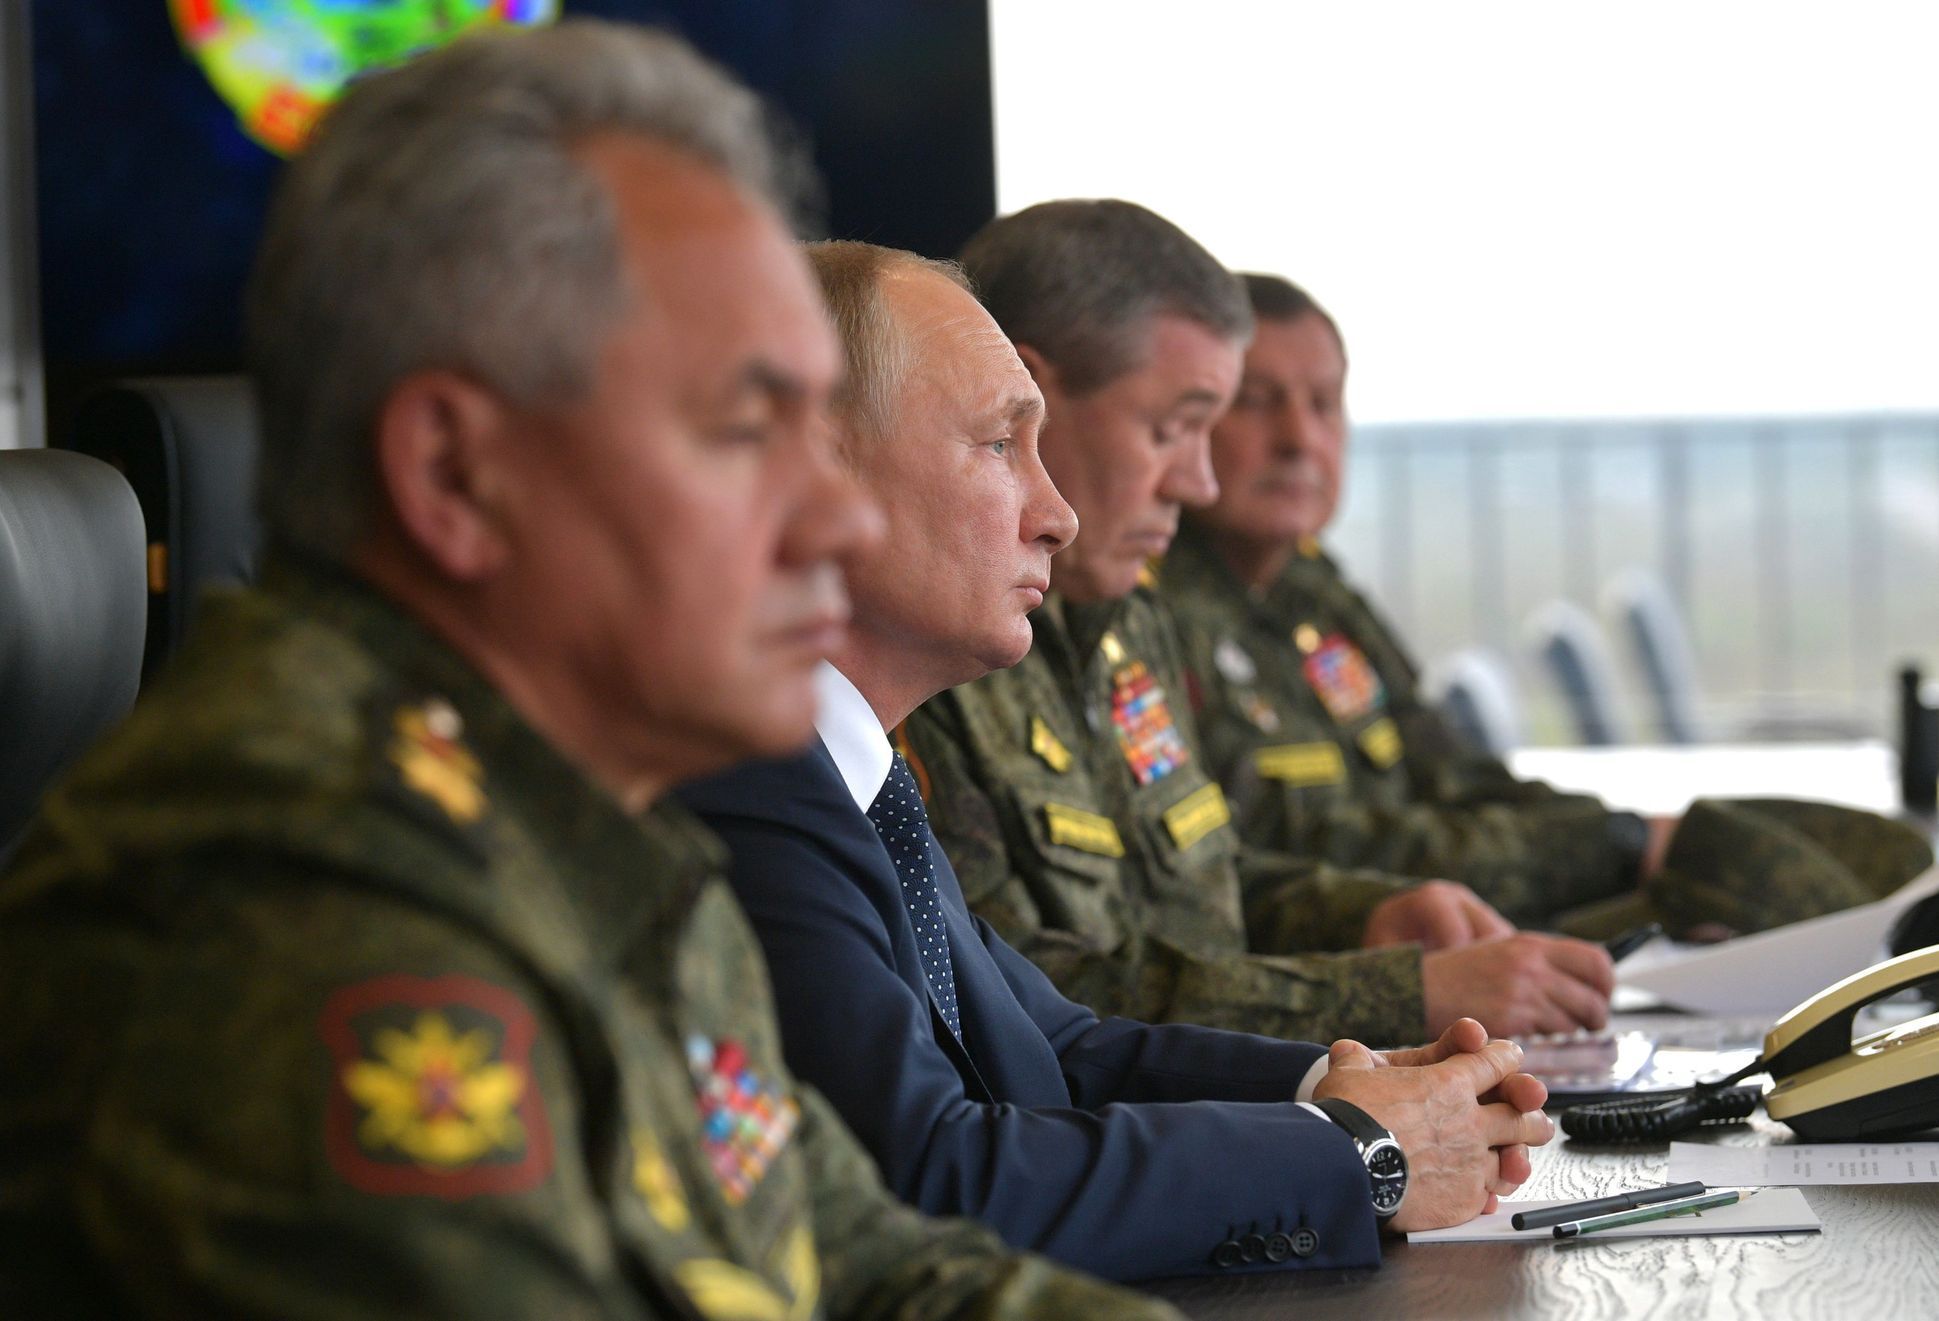 Vedle Vladimira Putina sedí vpravo náčelník generálního štábu ruské armády Valerij Gerasimov a vlevo ministr obrany Sergej Šojgu.